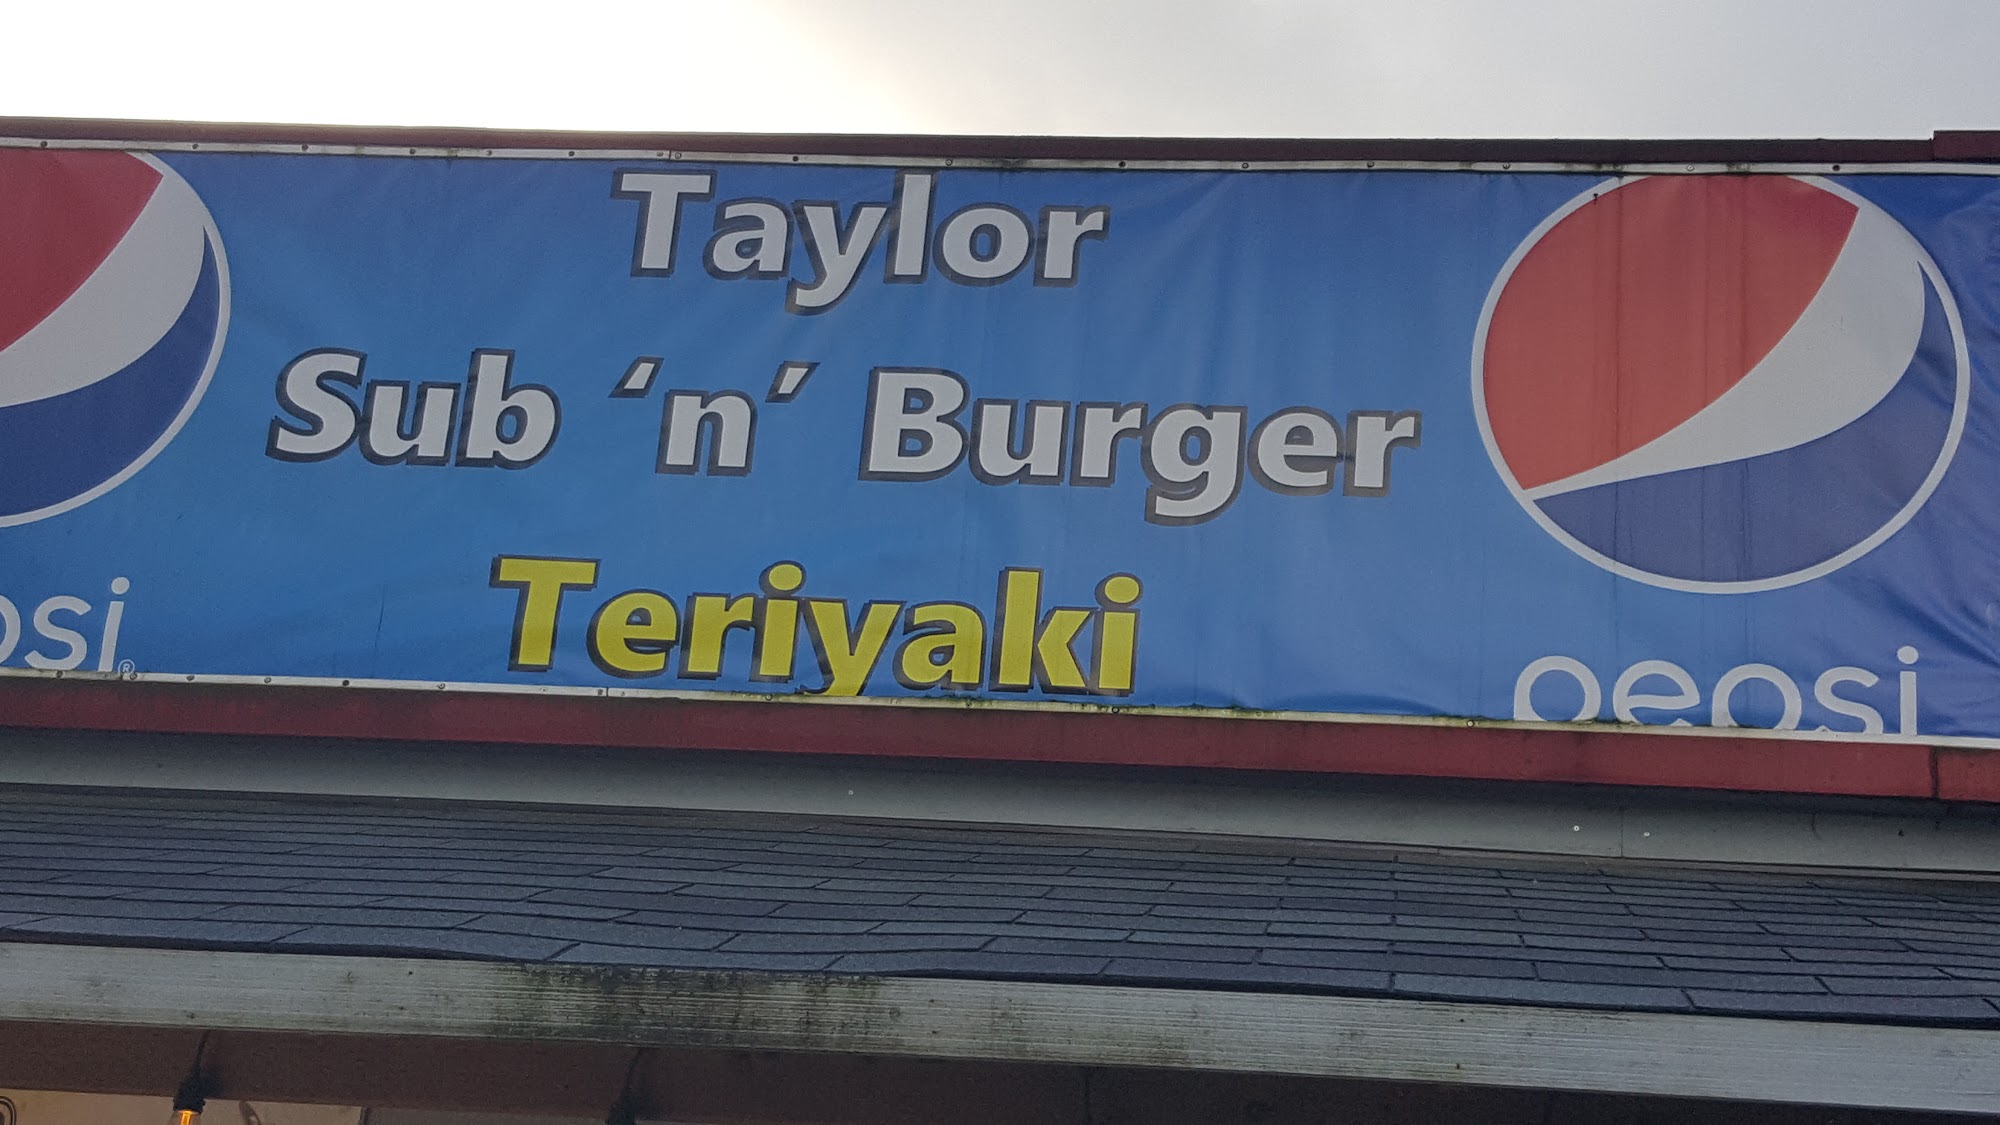 Taylor Sub 'n' Burger